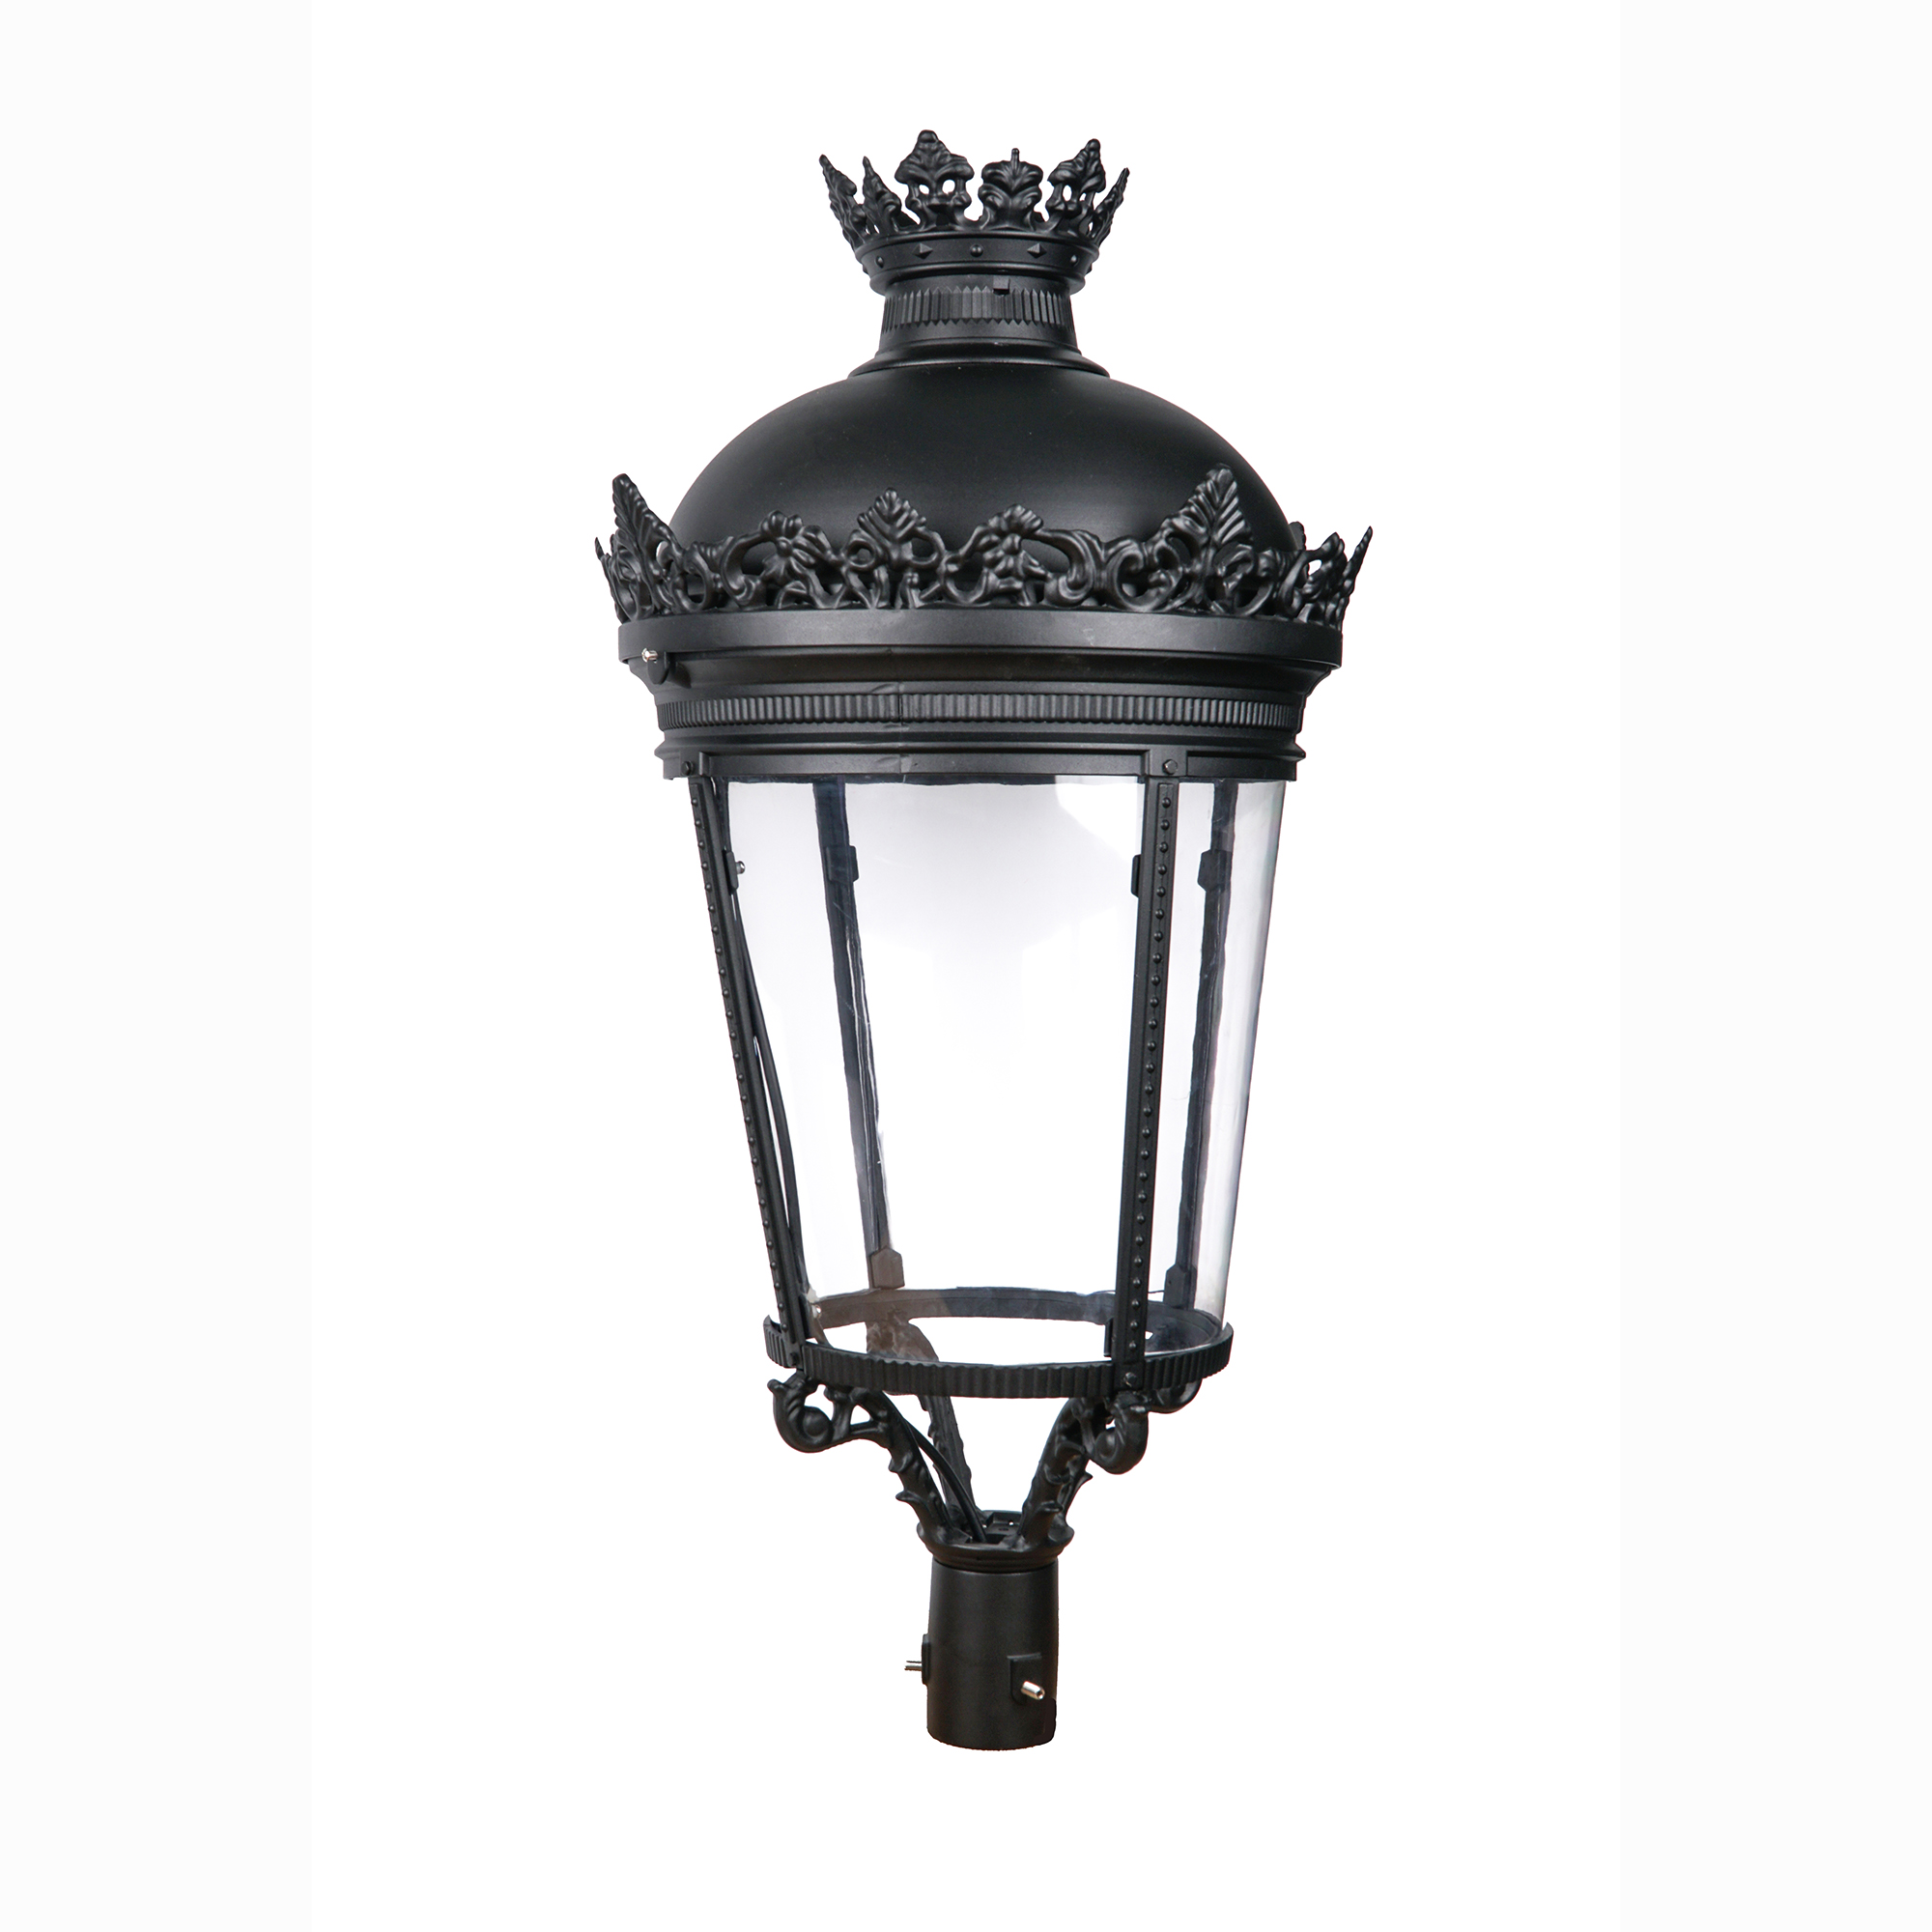 Classic Illumination: European Heritage with 100W Antique Lamp Post for Garden Solar Lighting